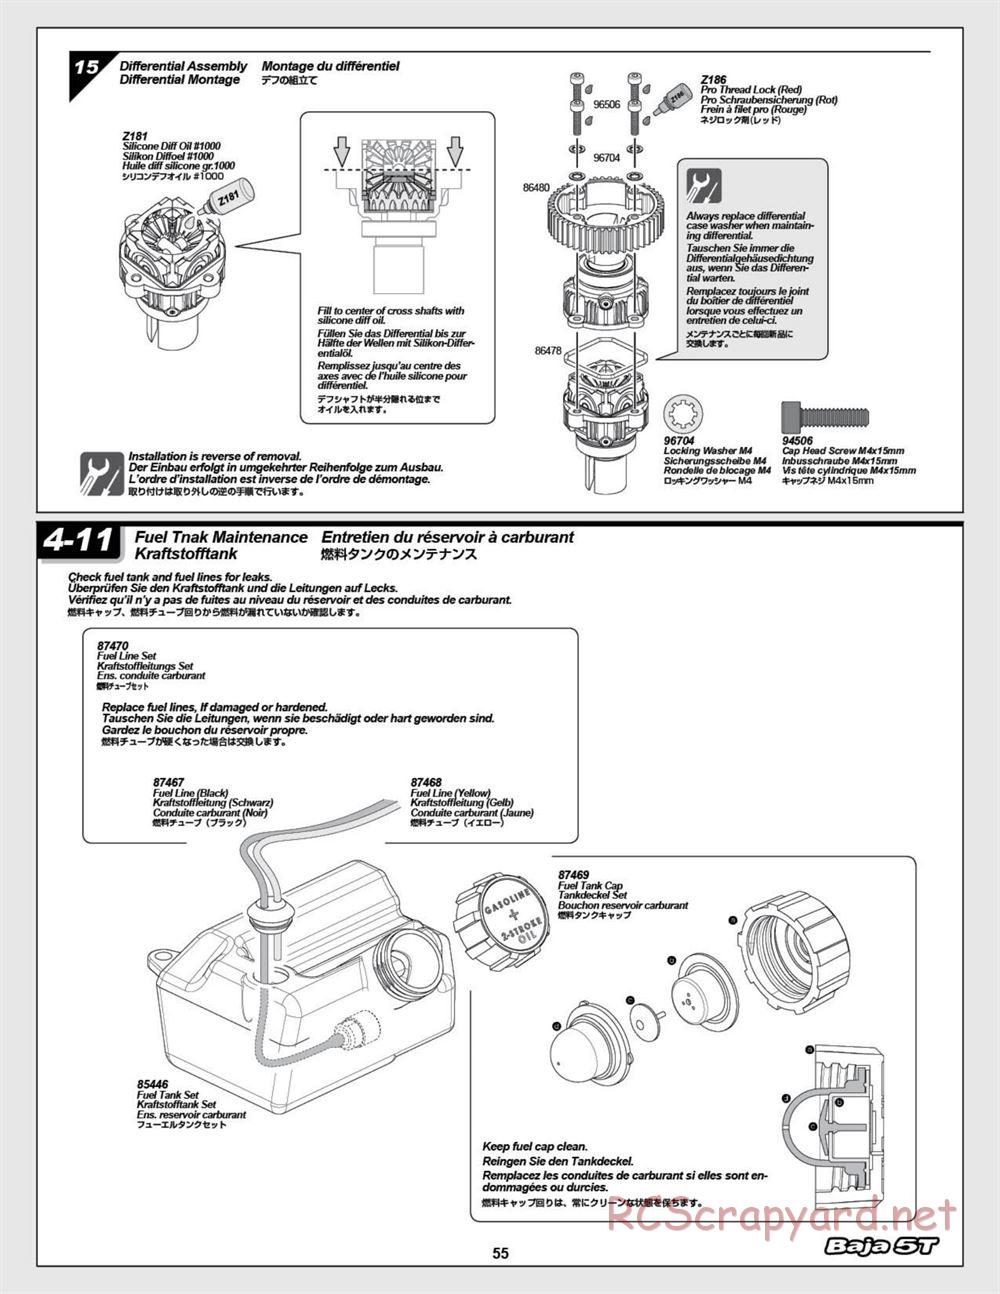 HPI - Baja 5T (2008) - Manual - Page 55